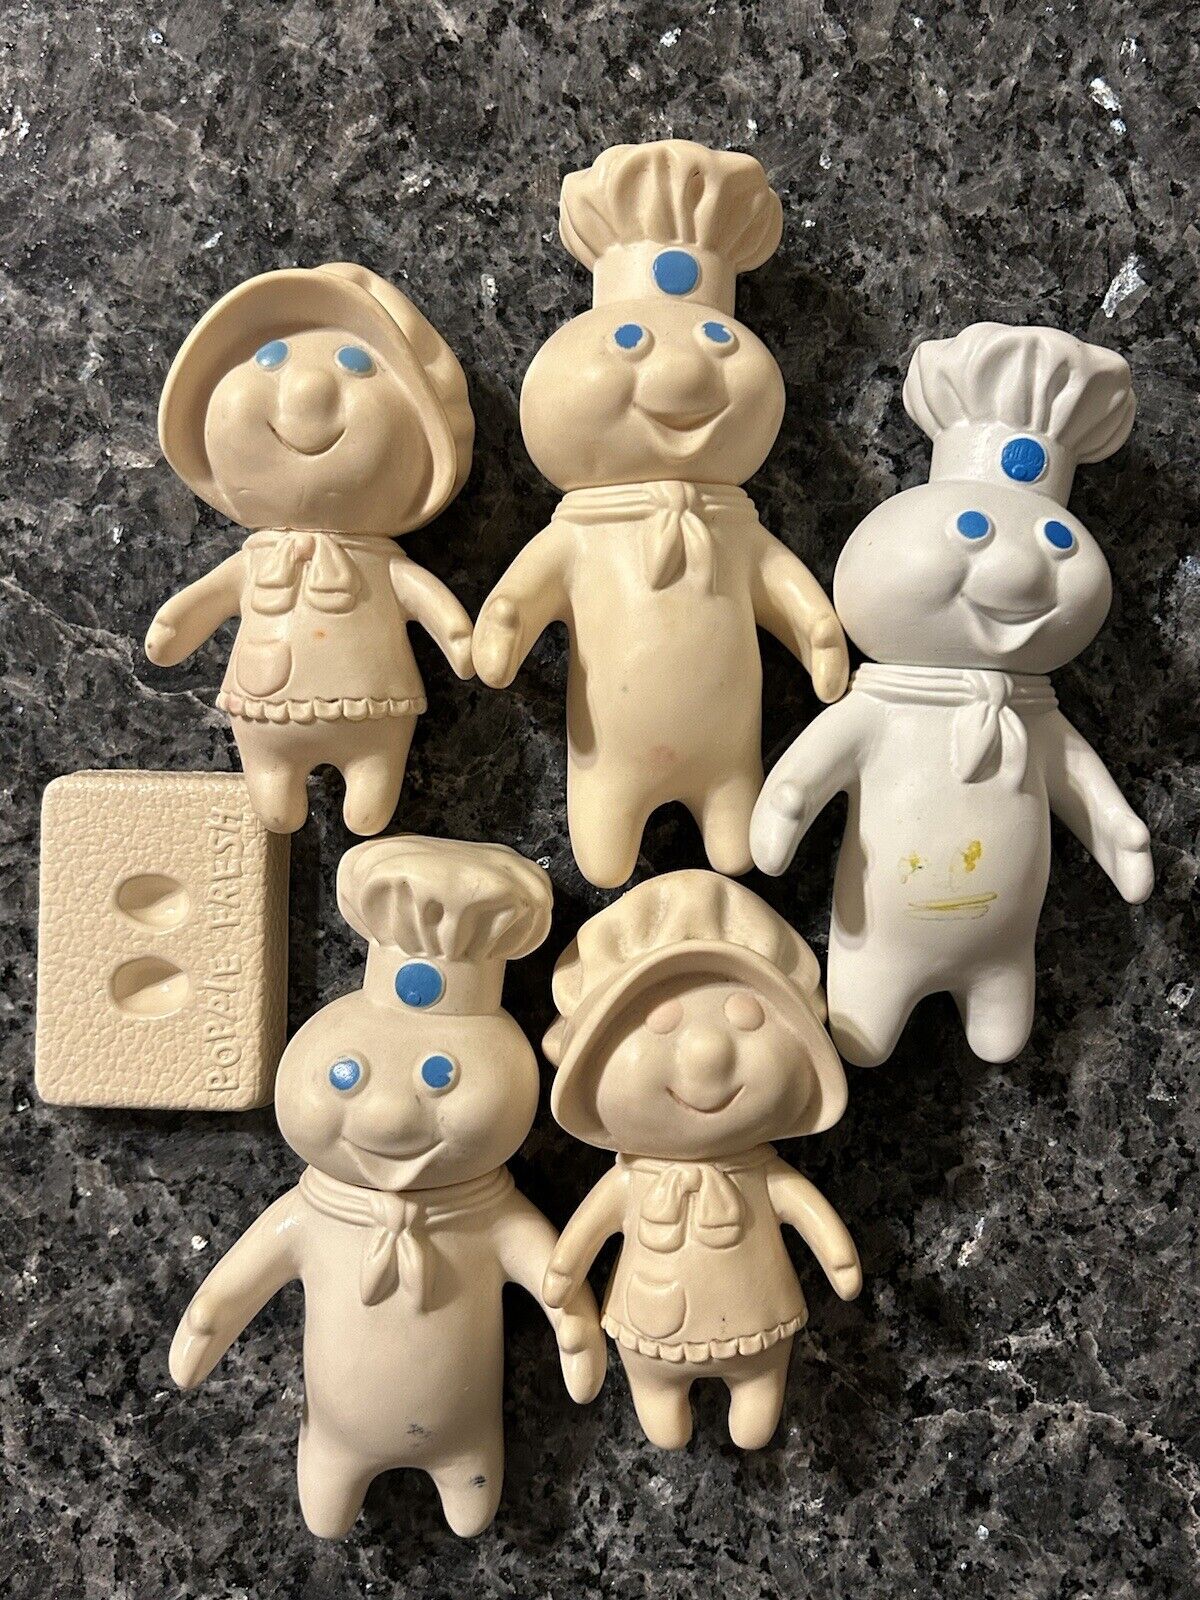 Lot of 5 Pillsbury Doughboy Rubber Dolls (Poppin’ & Poppie Fresh) w/ 1 Stand